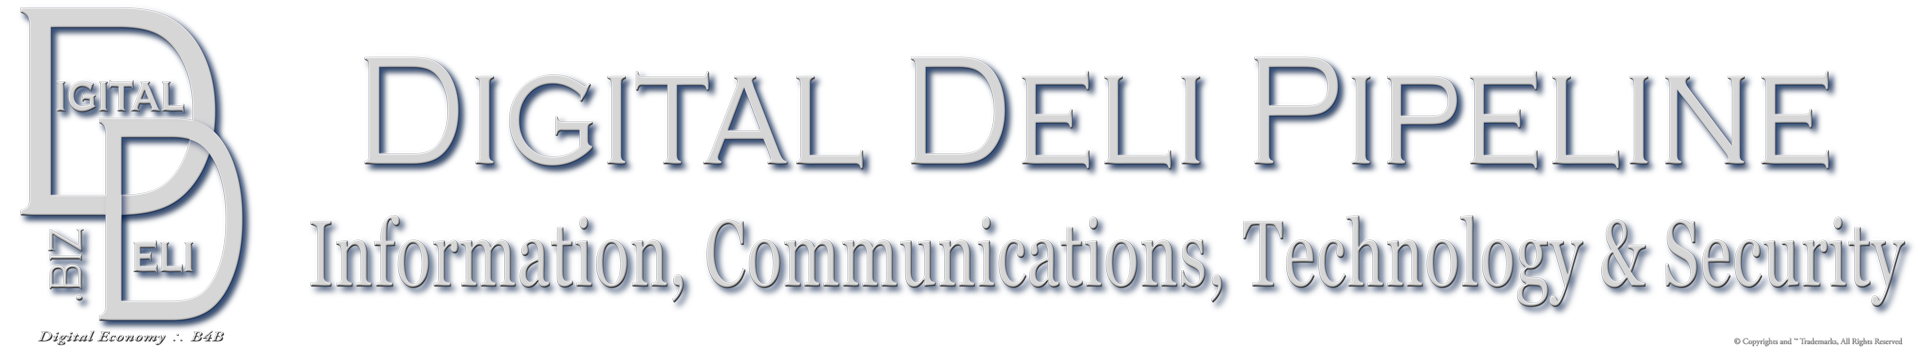 DigitalDeli.biz Properties & Brands Imprint, Digital Deli Pipeline